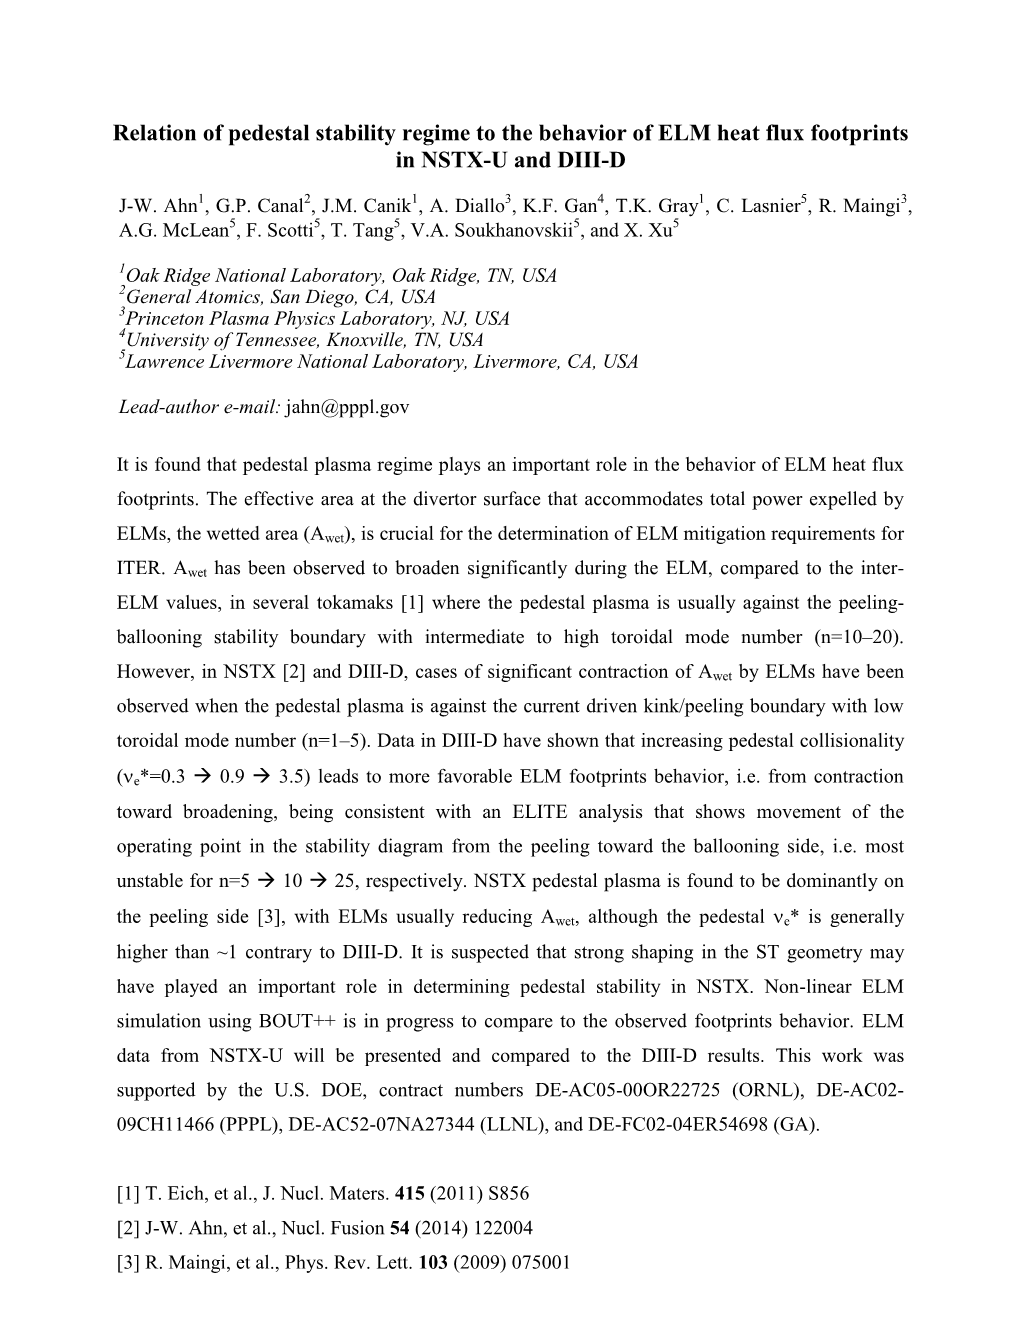 Relation of Pedestal Stability Regime to the Behavior of ELM Heat Flux Footprints in NSTX-U and DIII-D